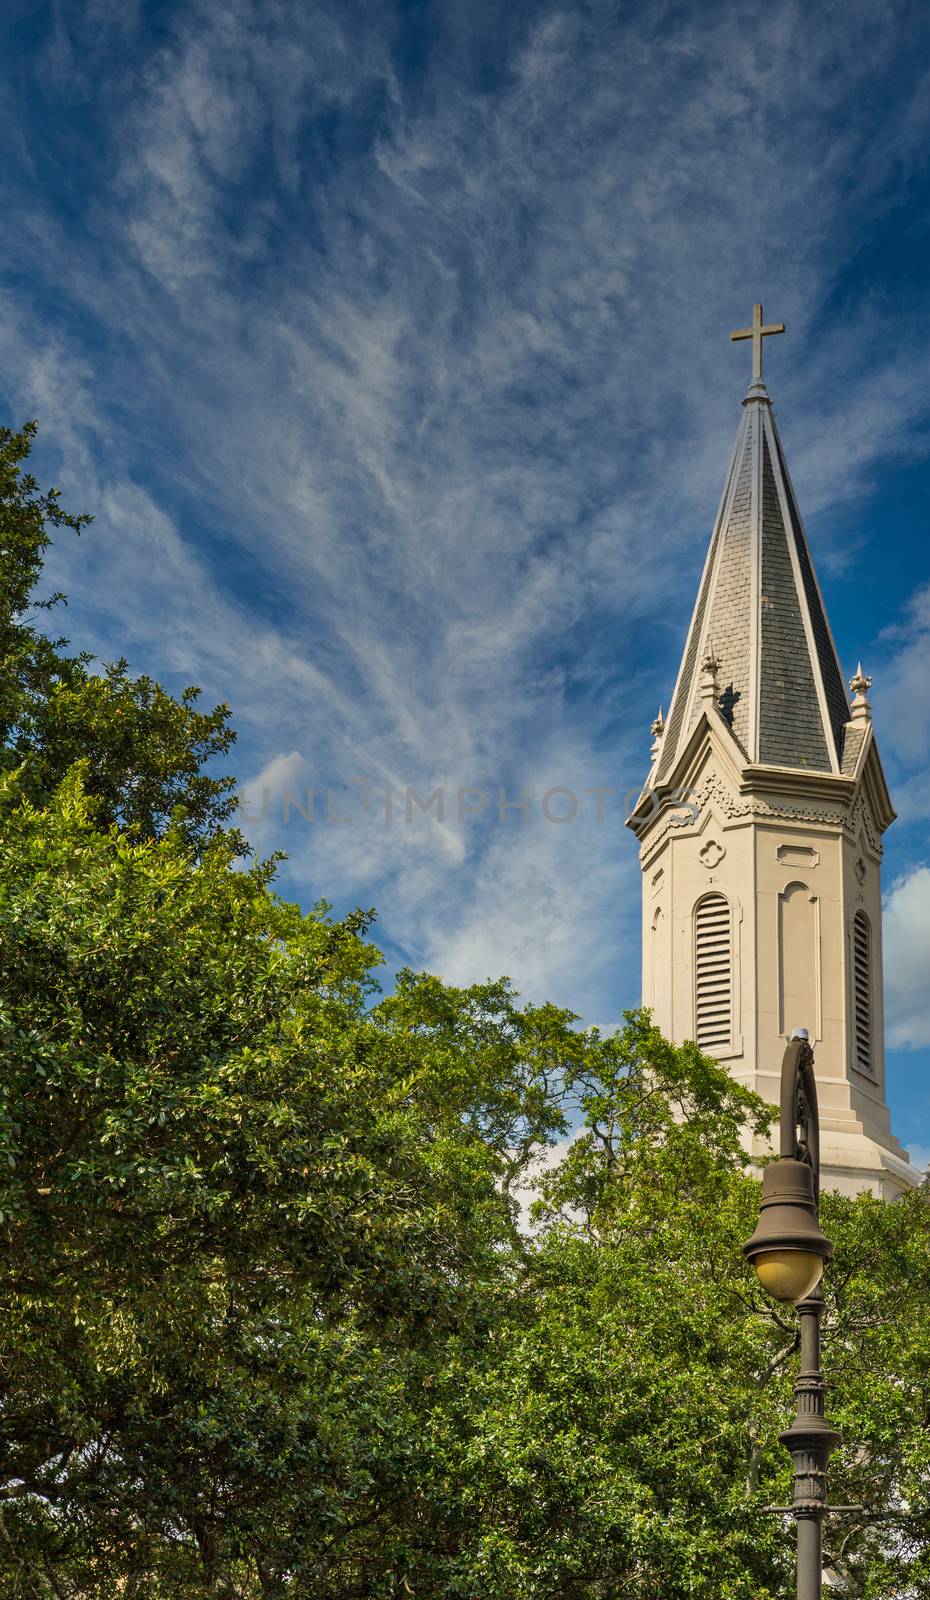 Old church steeple rising from trees in Savannah, Georgia